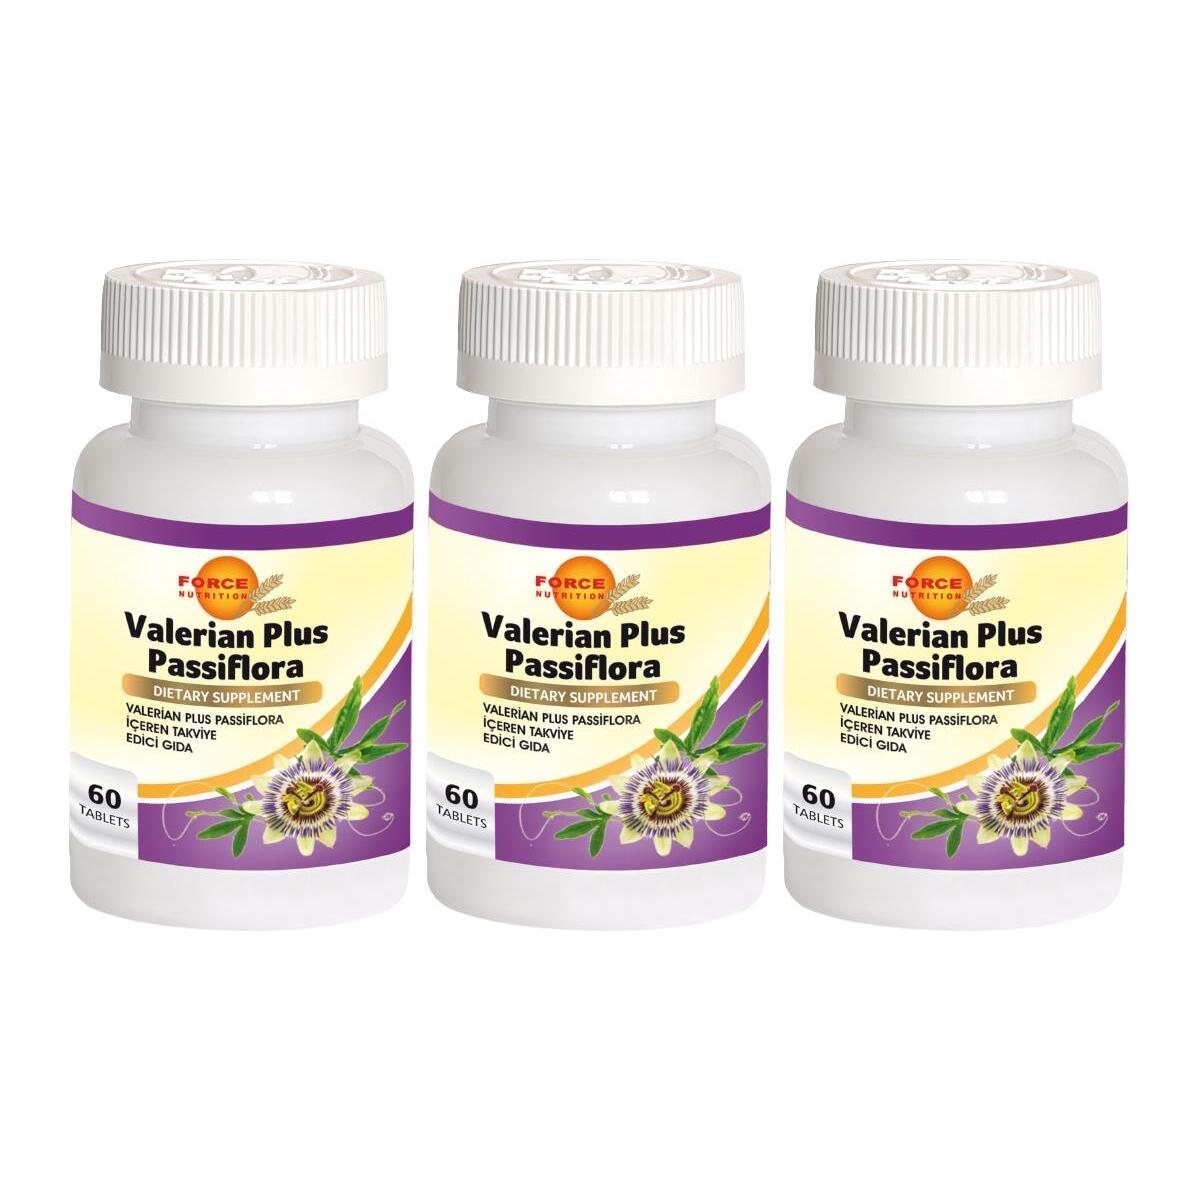 Force Nutrition Valerian Plus Passiflora 3X60 Tablet